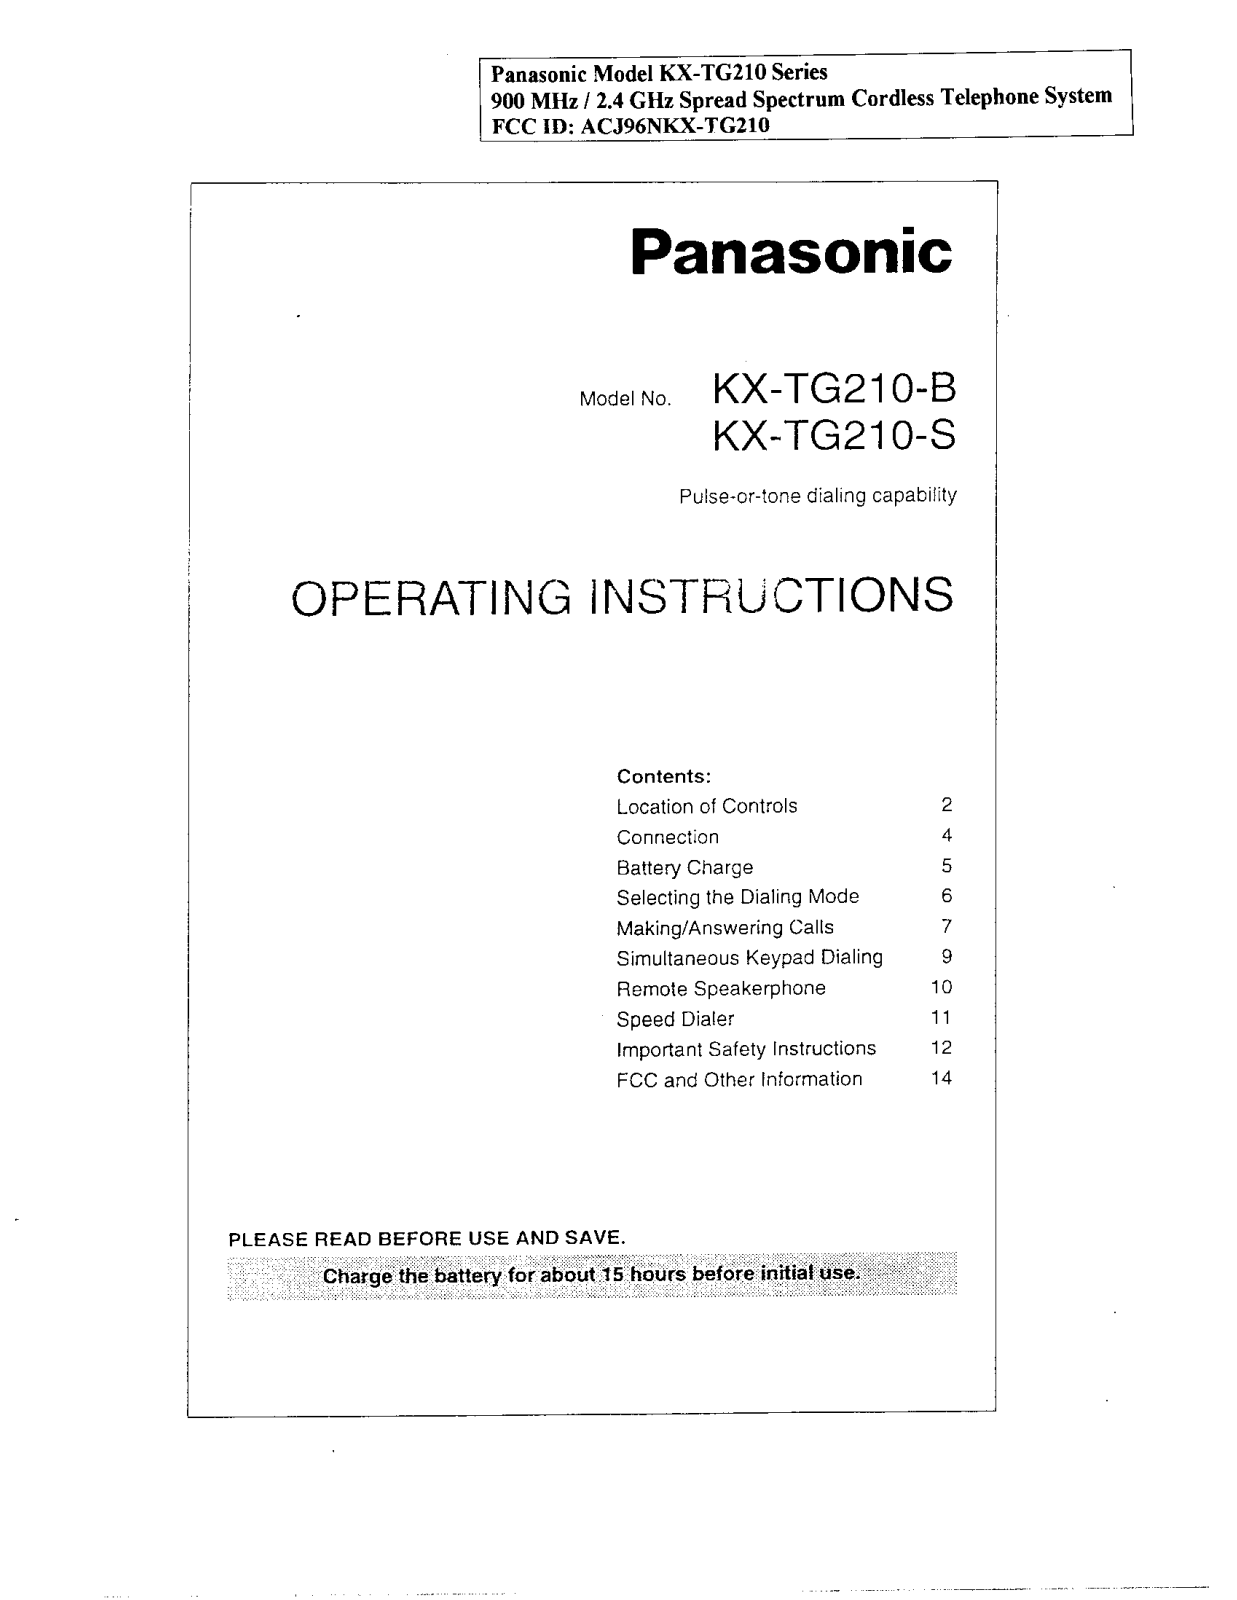 Panasonic 96NKX-TG210B Users Manual